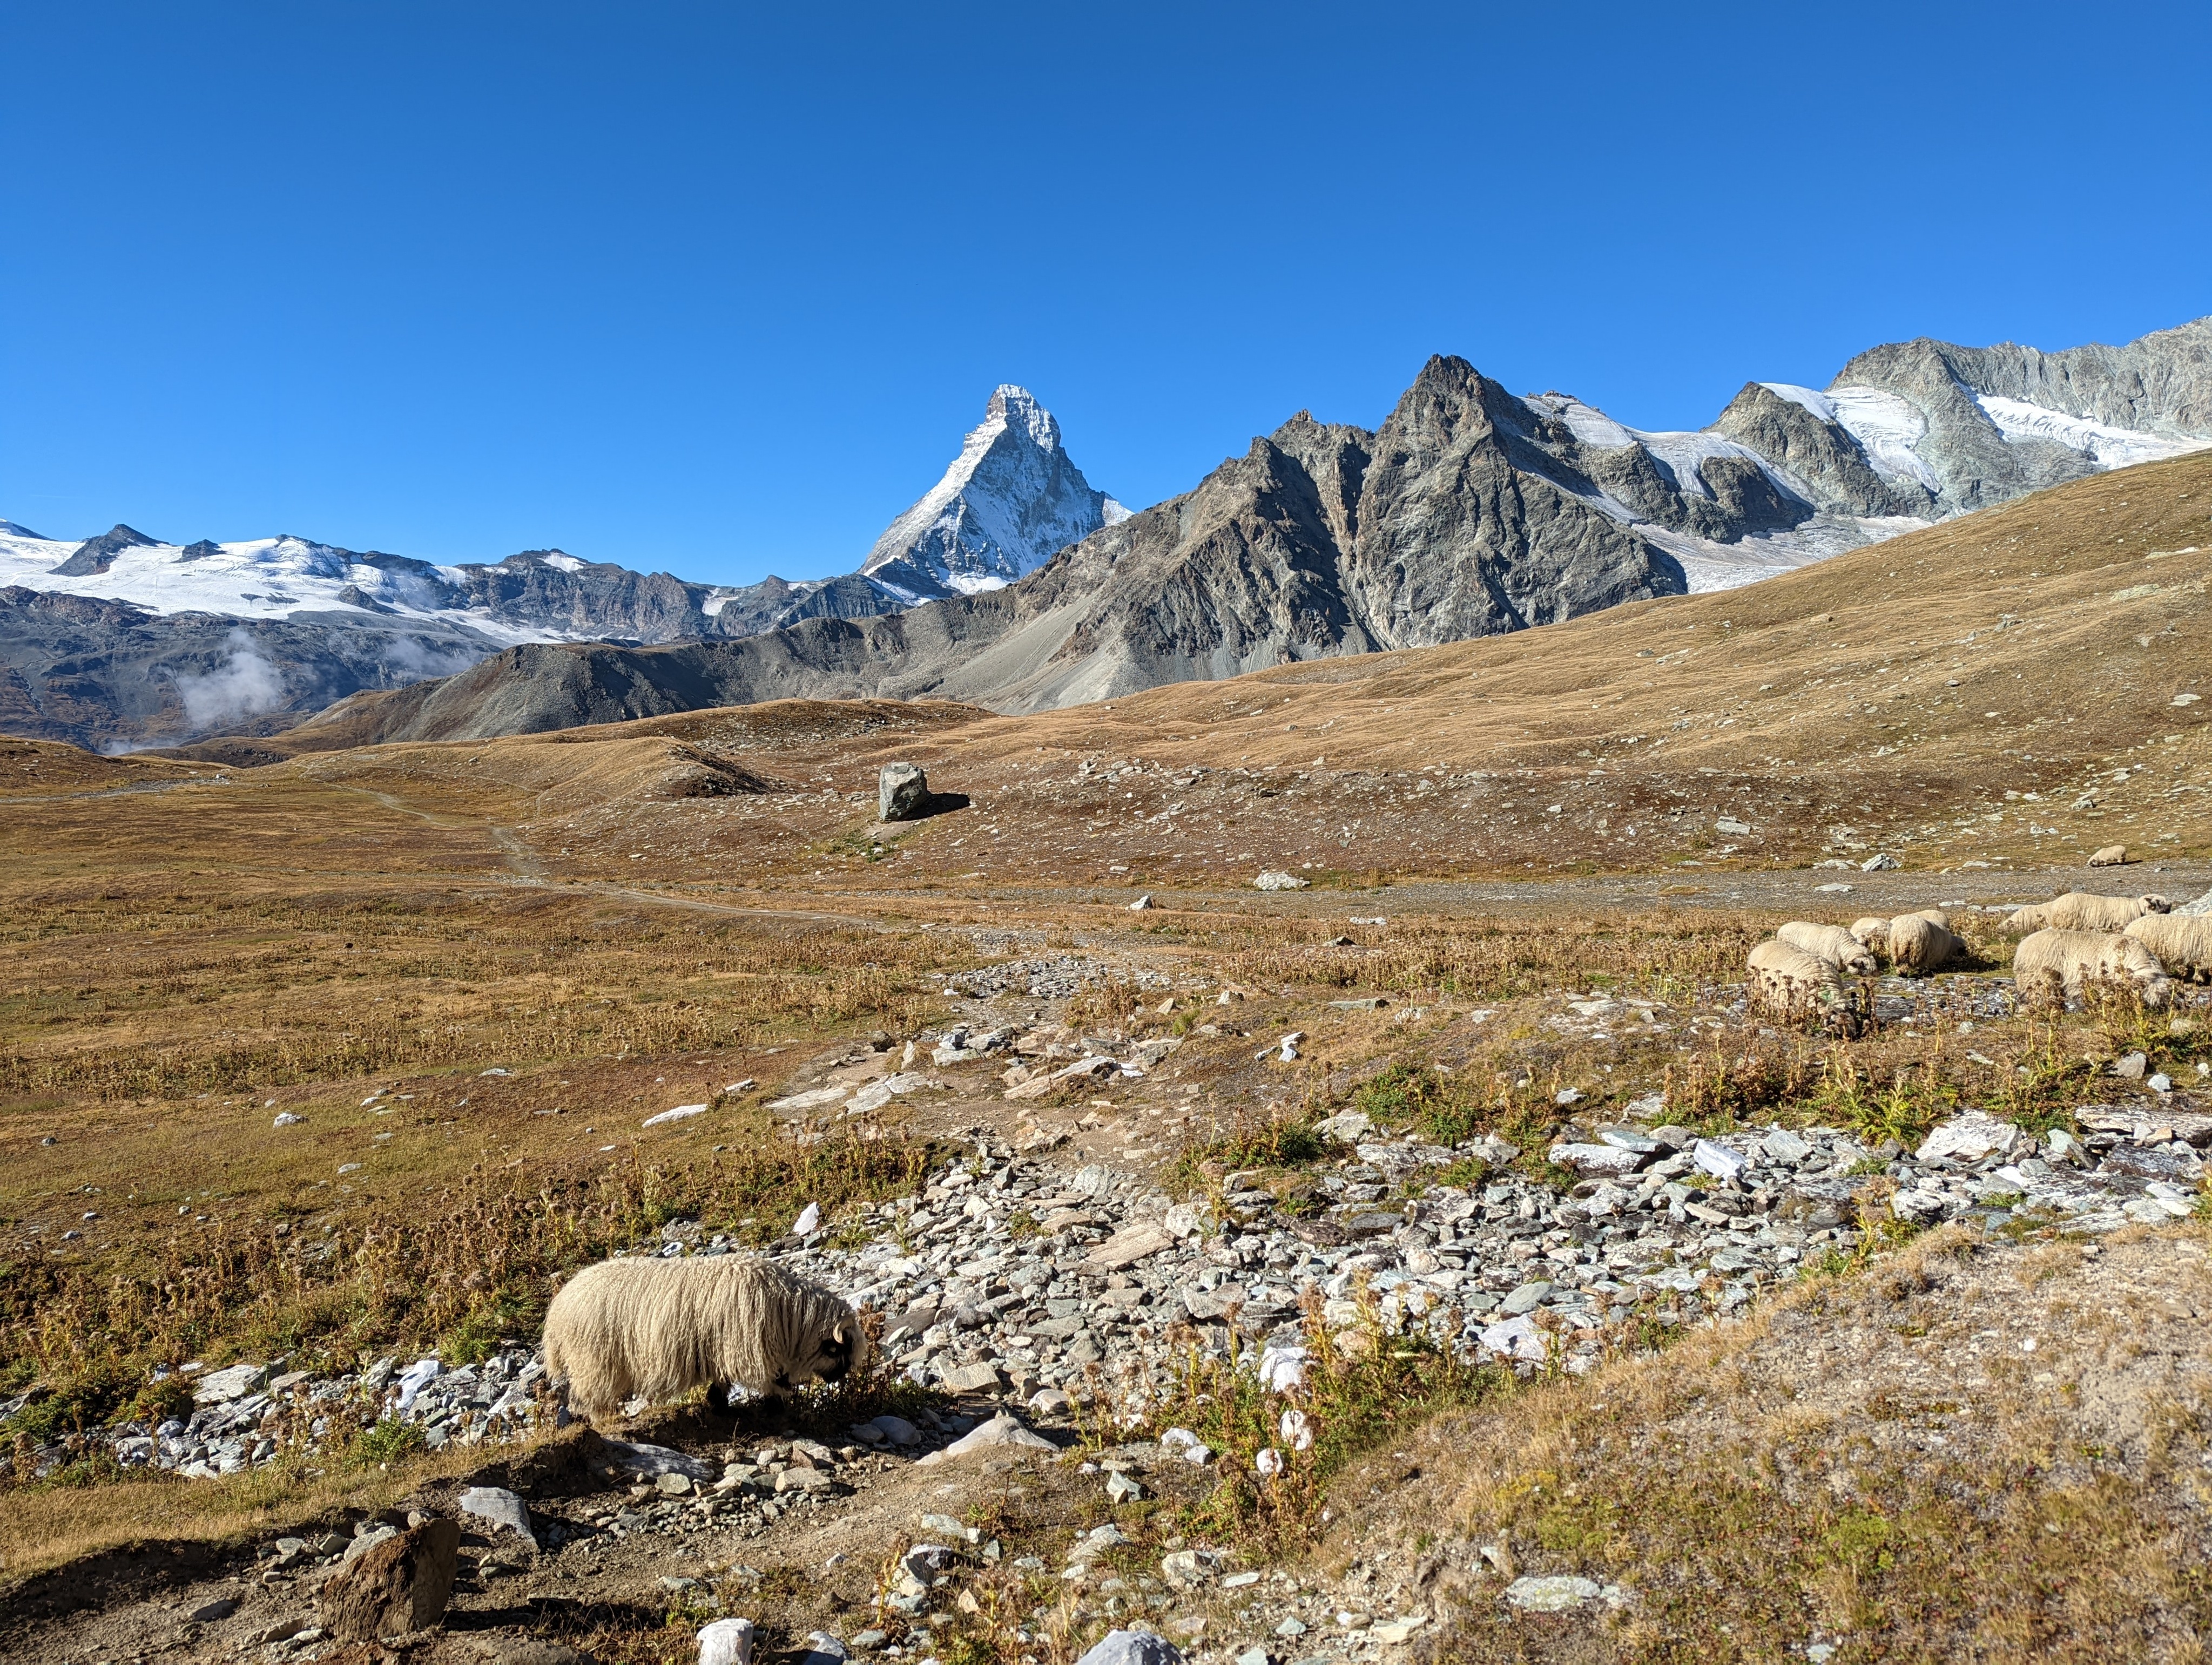 Valois Blacknose Sheep, Matterhorn in background